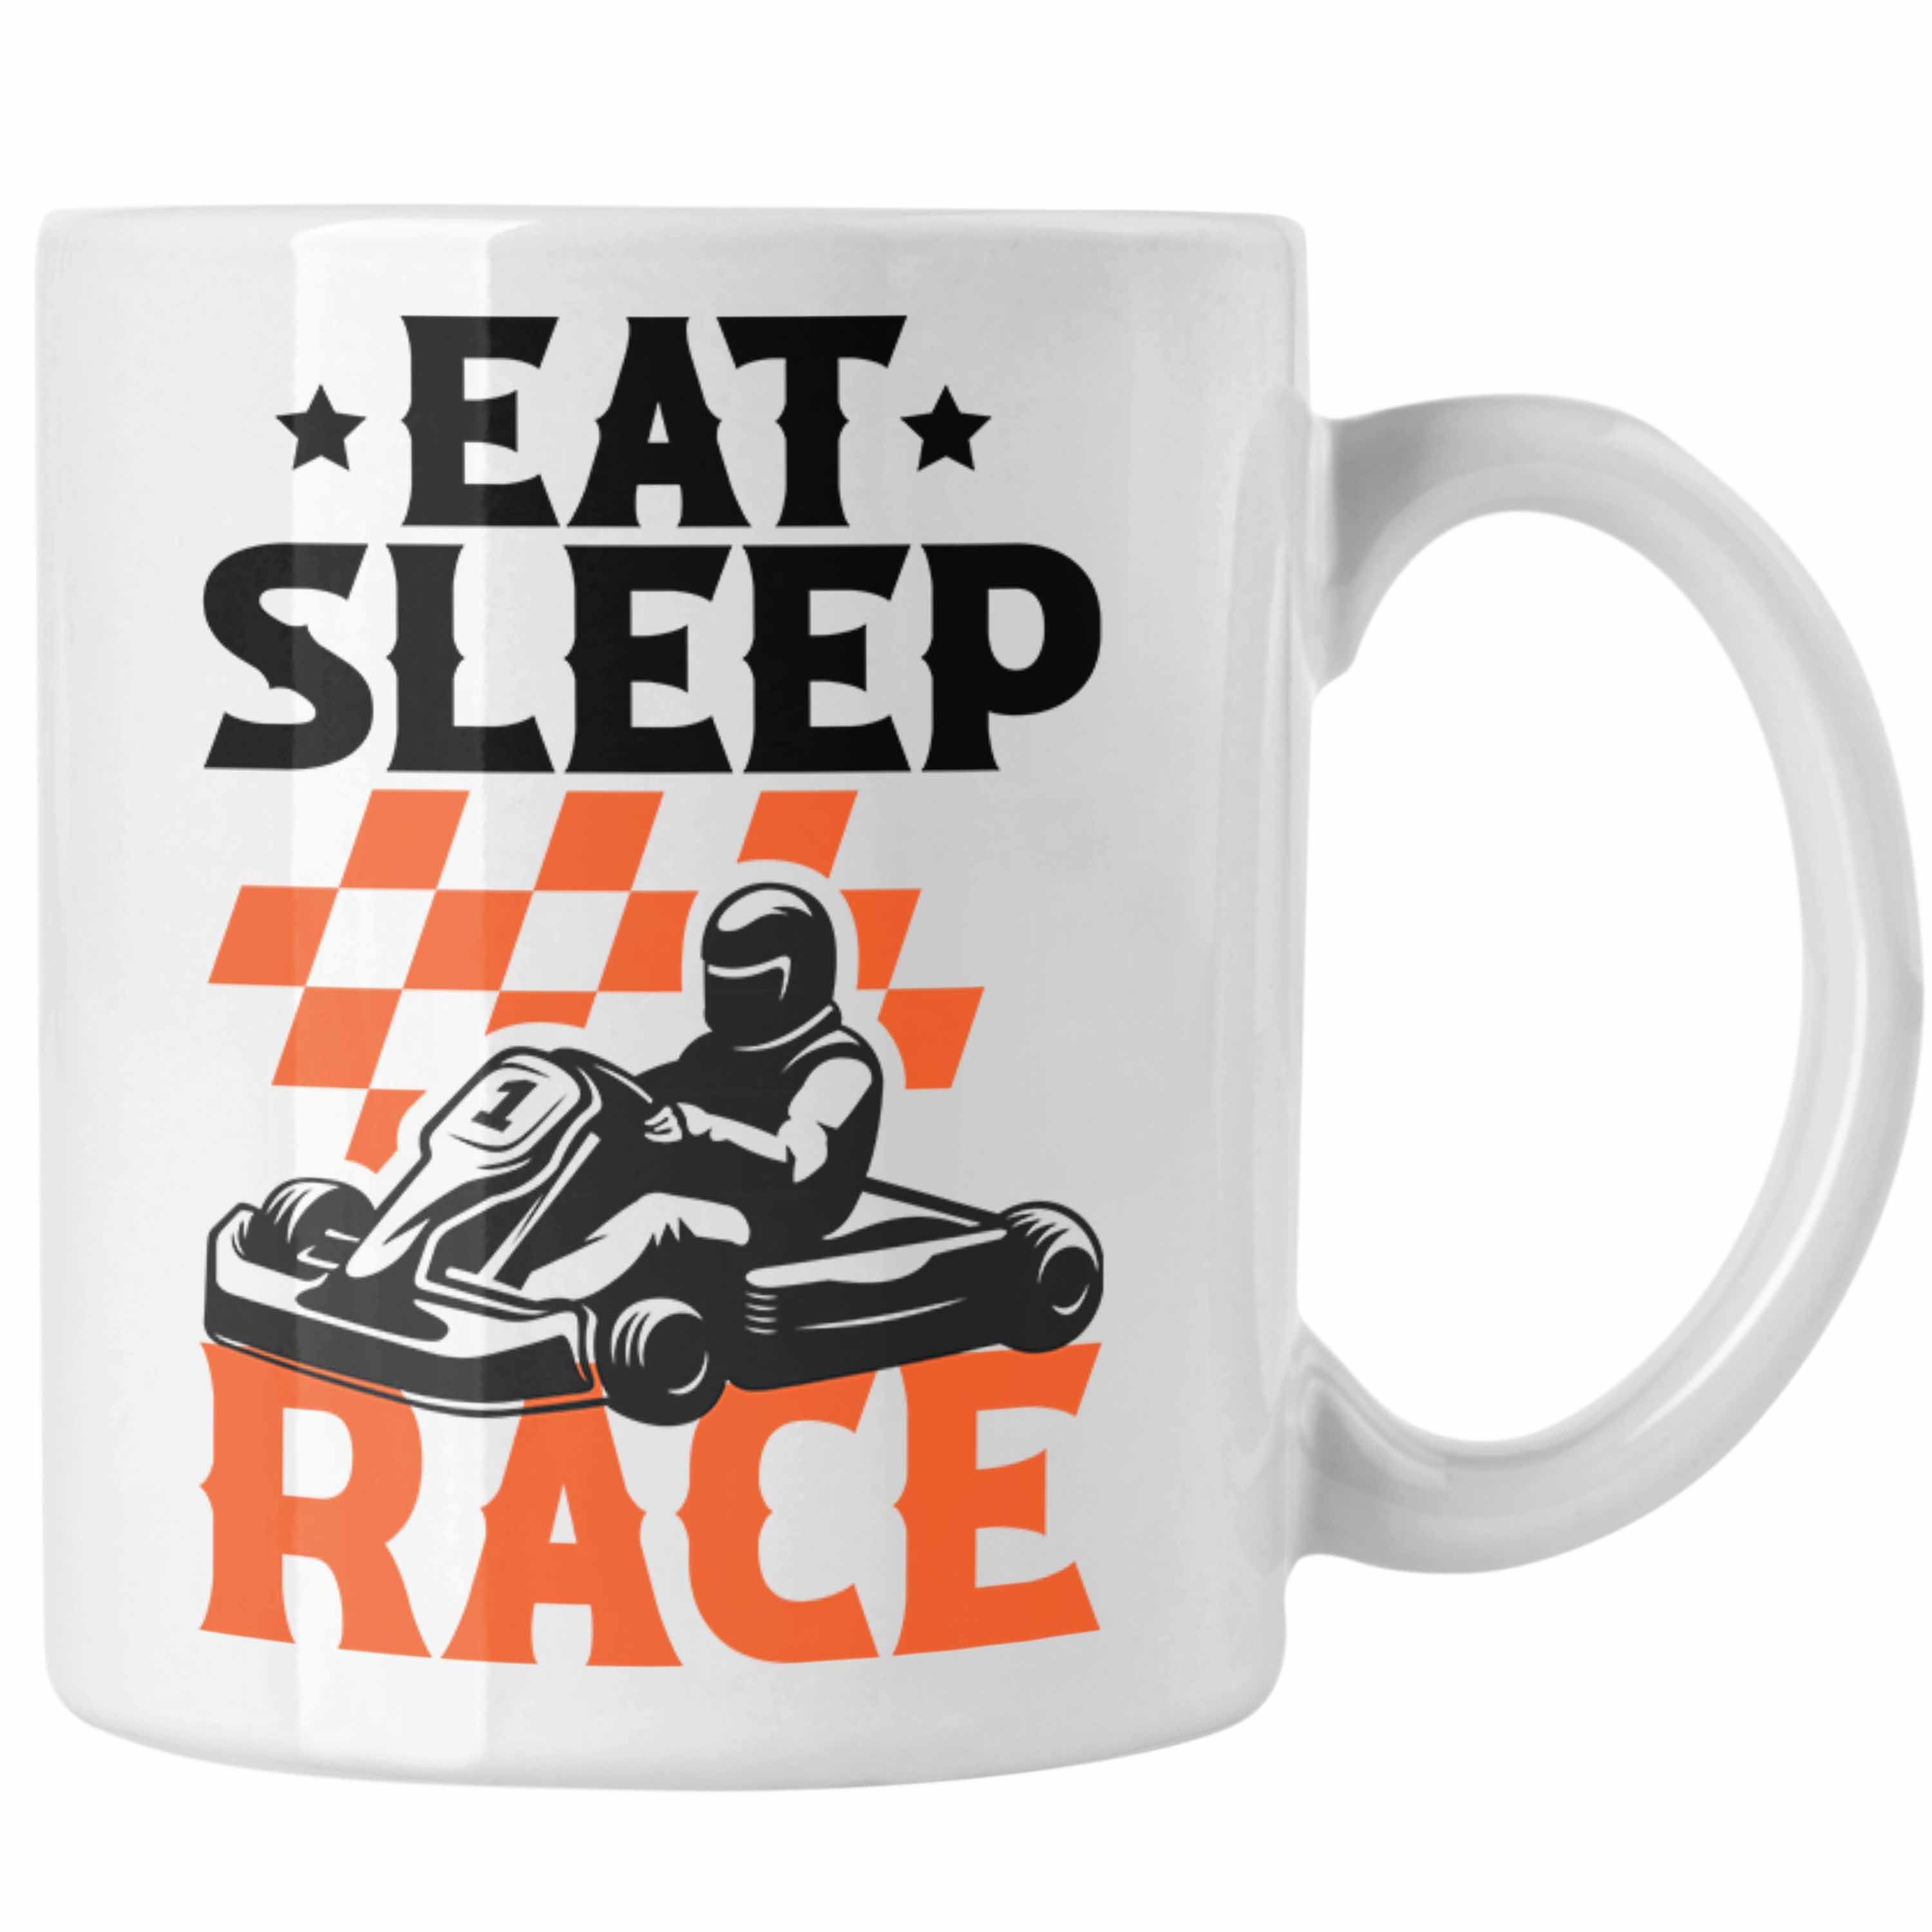 Trendation Tasse Trendation - Go Kart Fahrer Tasse Geschenk Eat Sleep Race Gokart Racing Rennfahrer Weiss